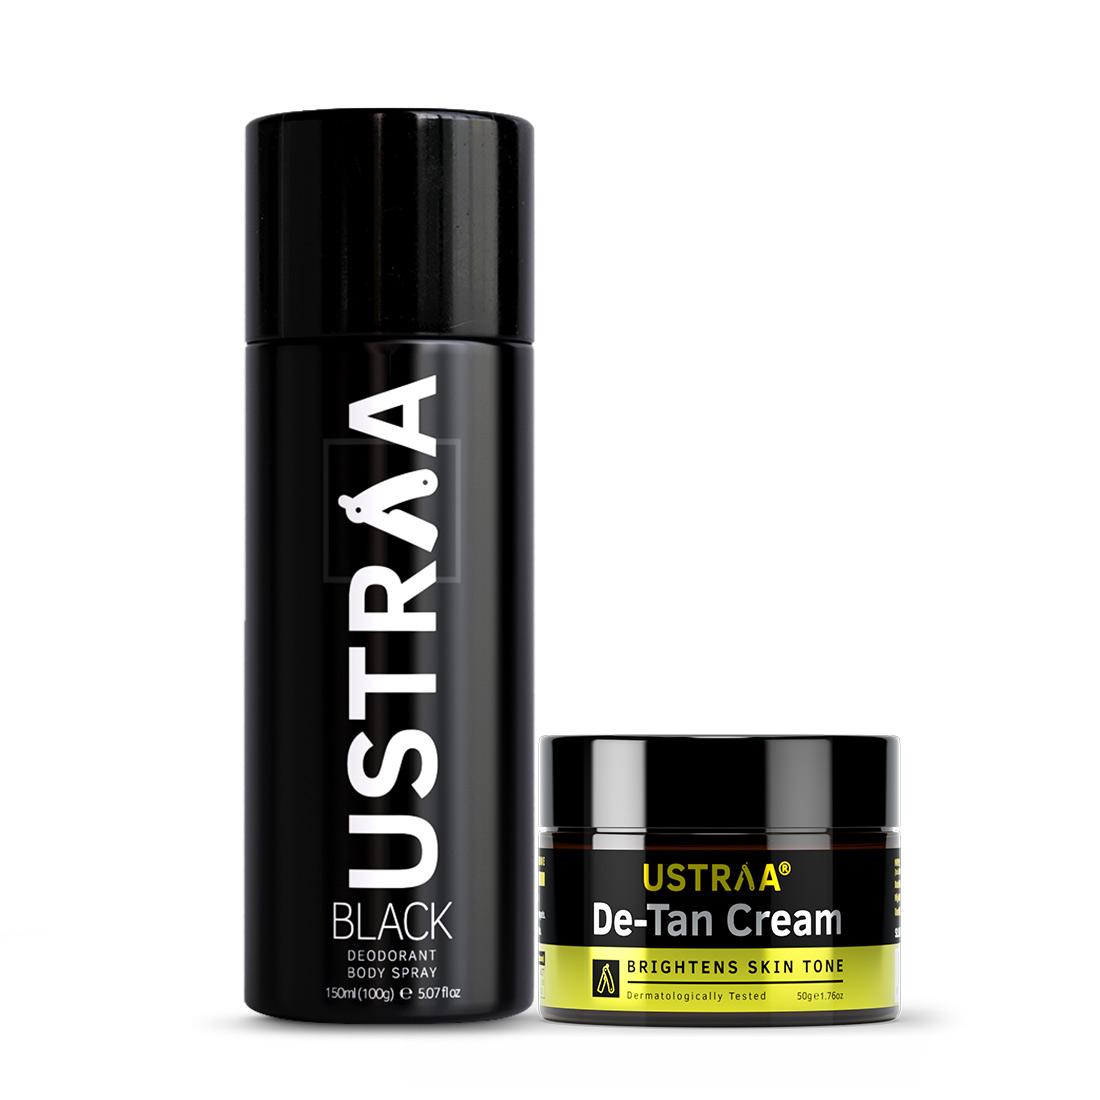 Ustraa Black Deodorant 150ml & De-tan Face Cream 50g